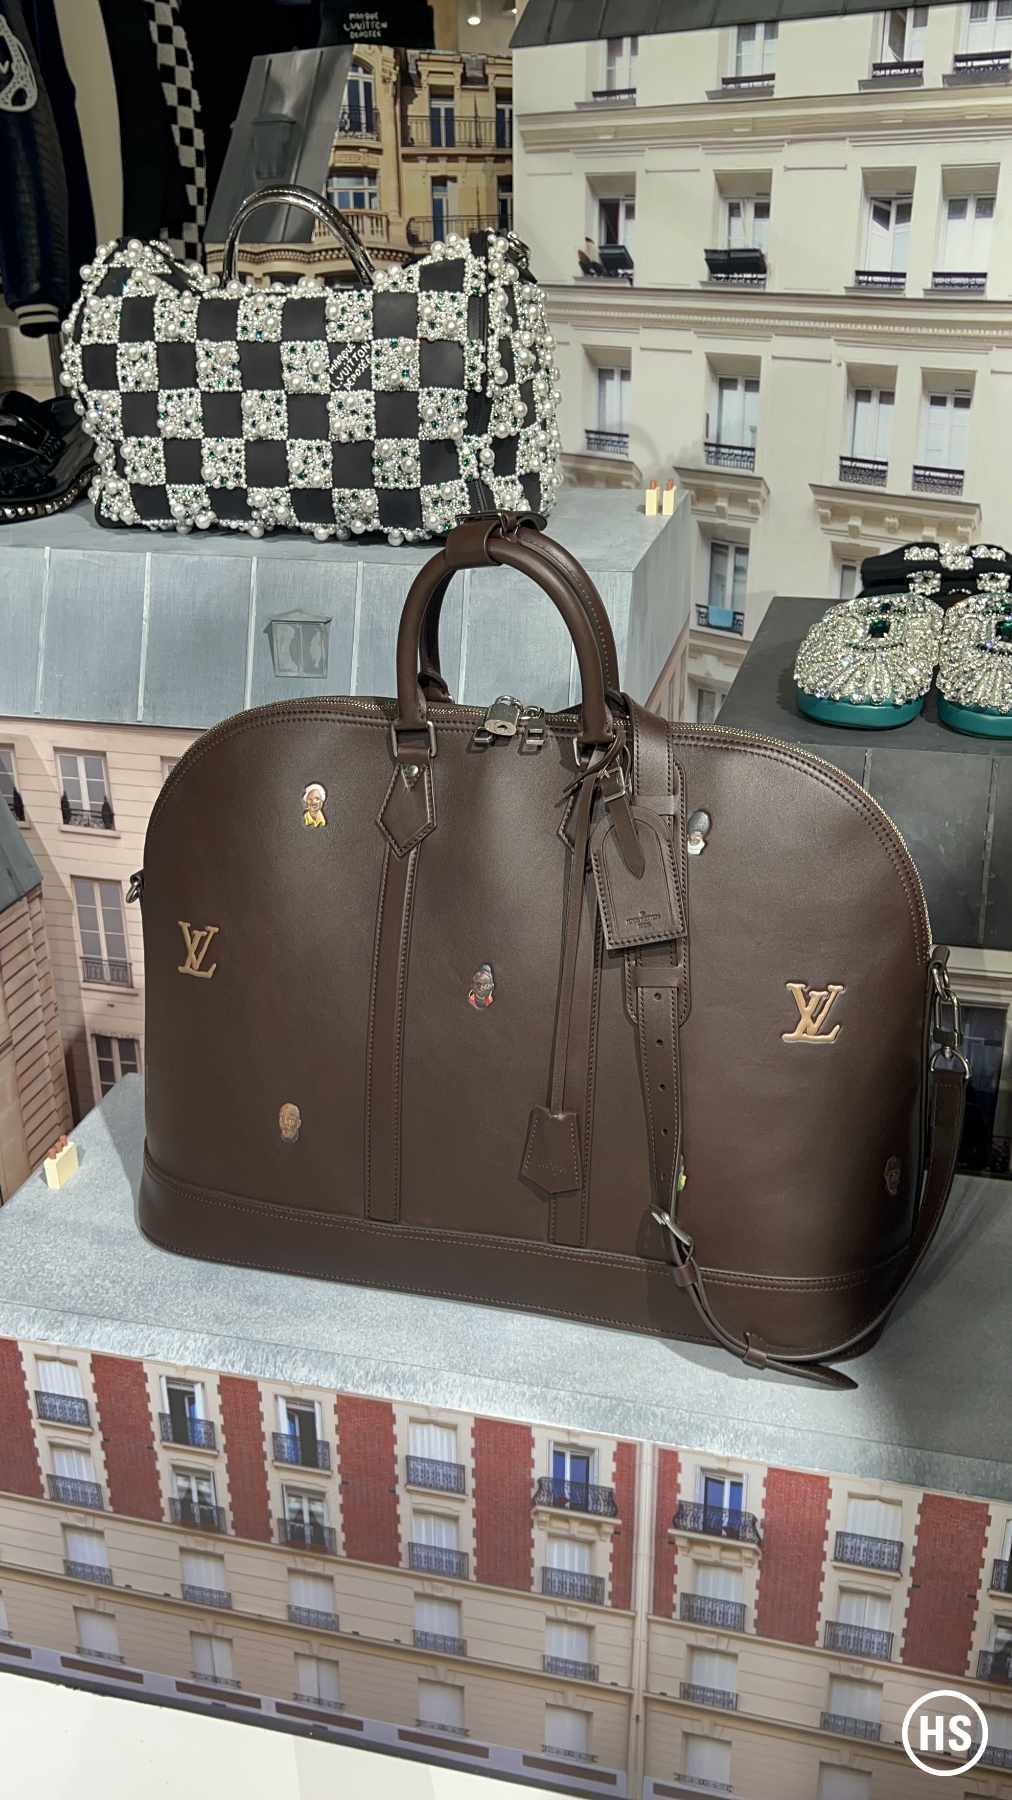 Learn More About Pharrell's $1 Million EUR Louis Vuitton Bag